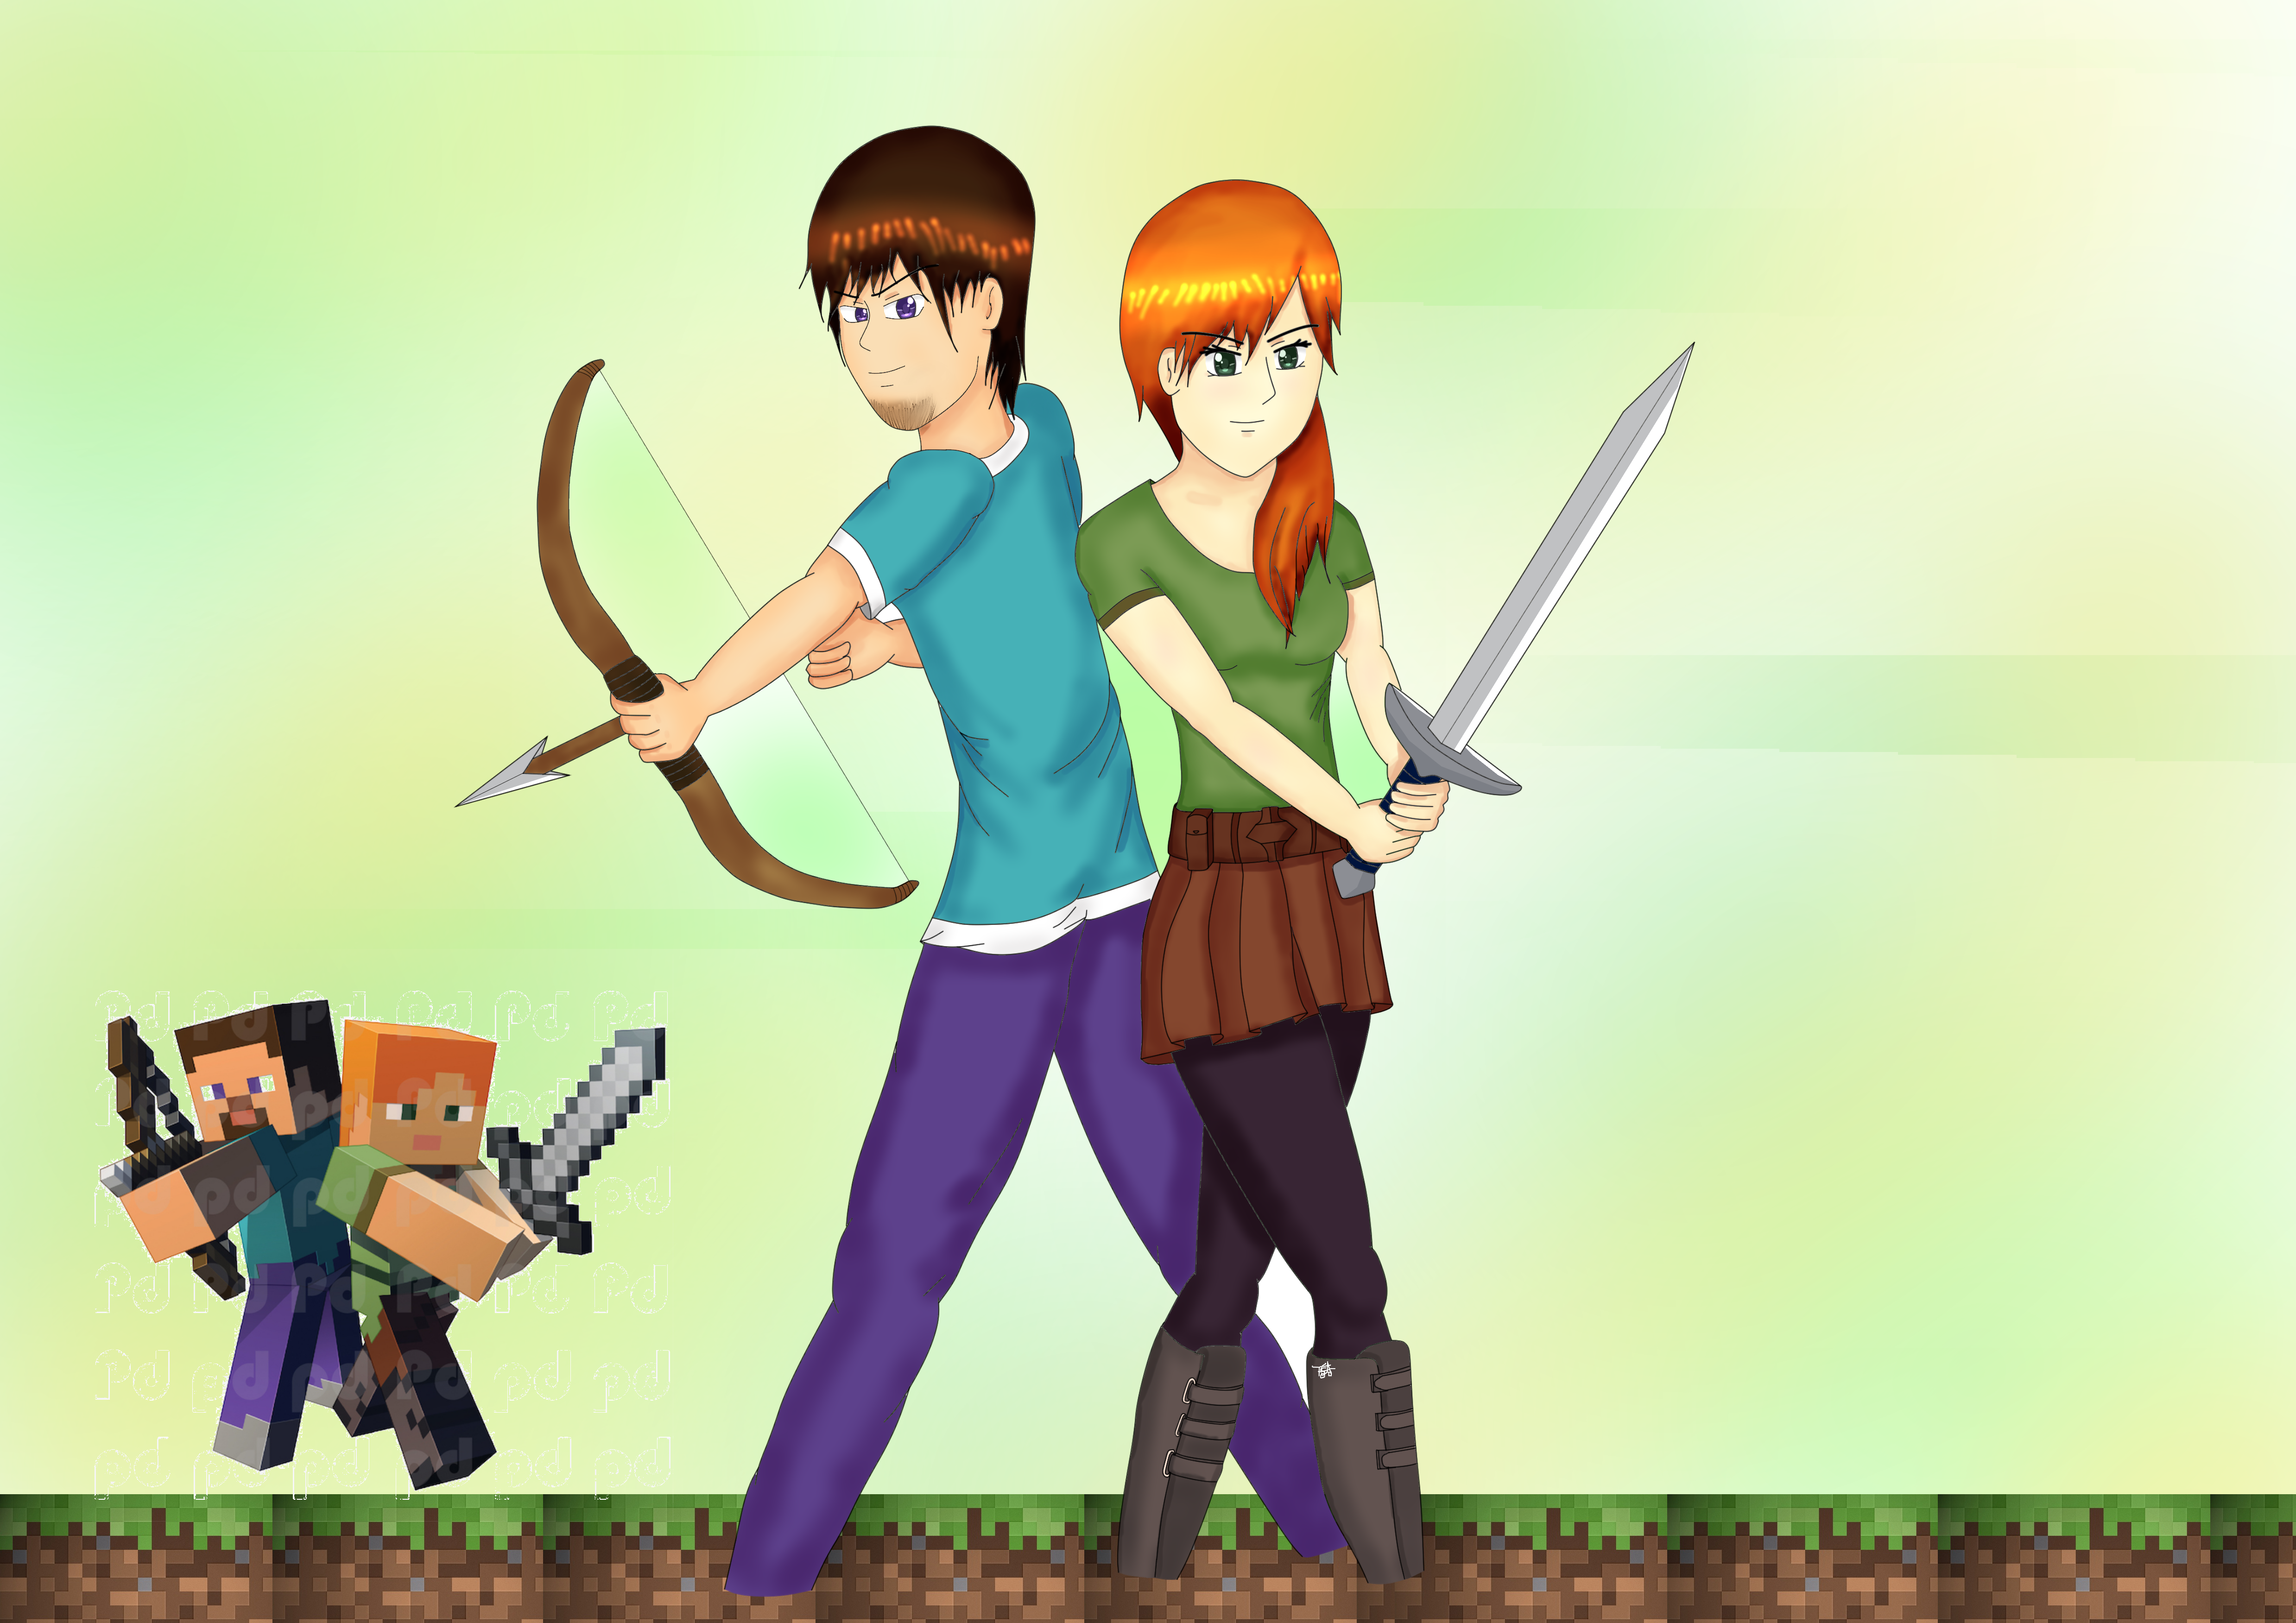 Minecraft's Steve and Alex by TobiShunziArts on DeviantArt.